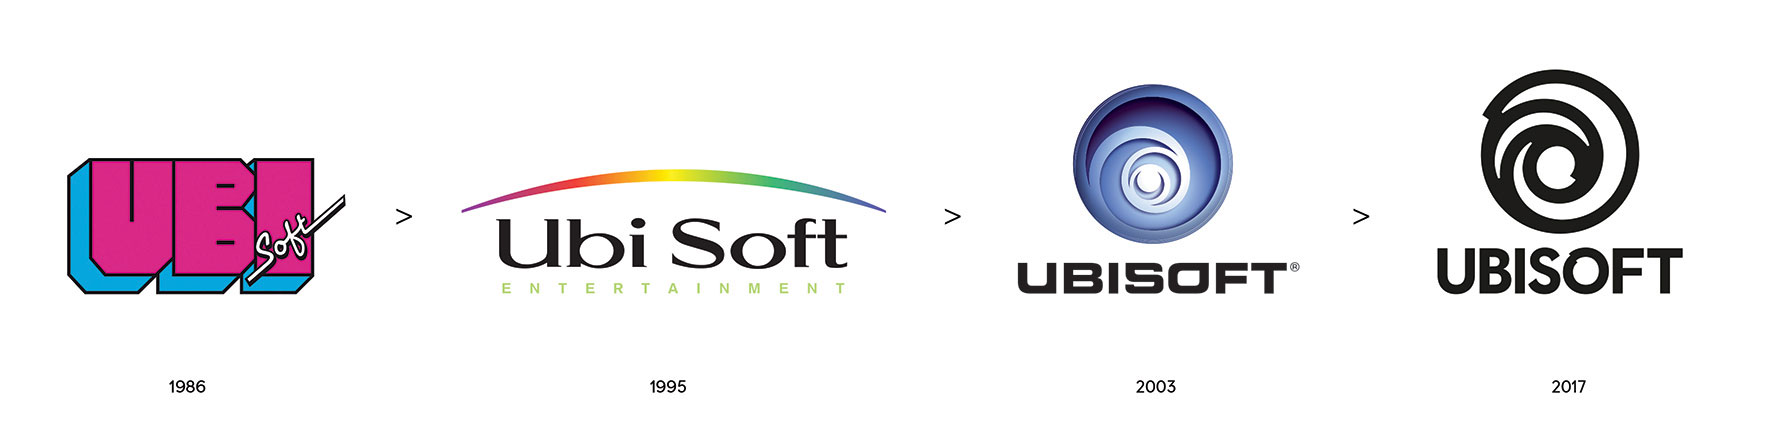 evolution of Ubisoft logos